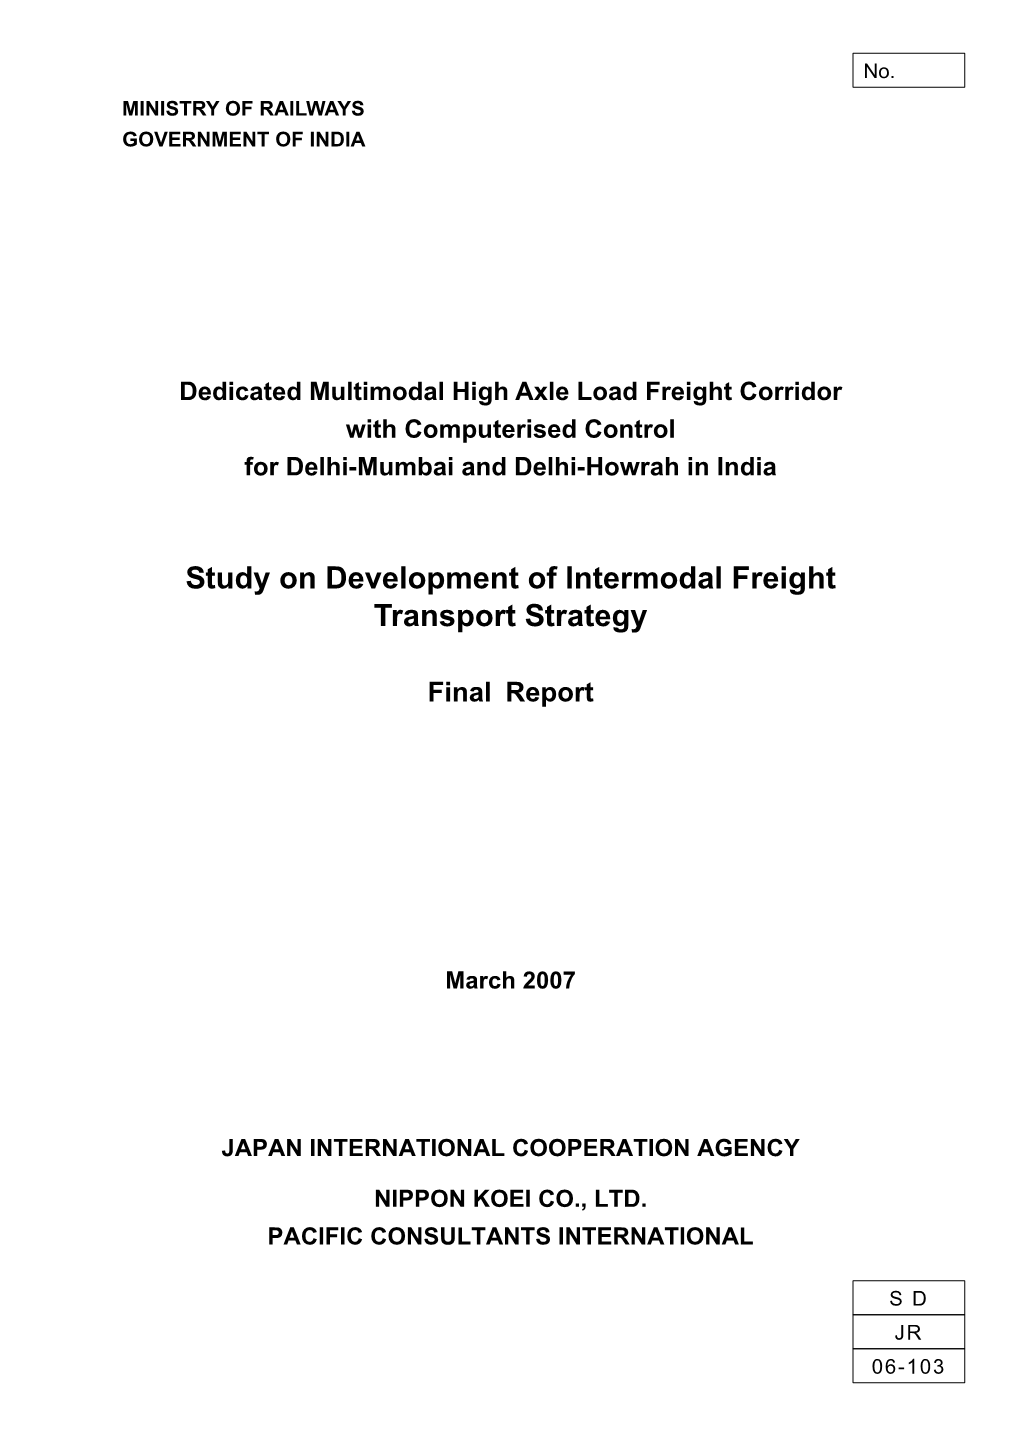 Study on Development of Intermodal Freight Transport Strategy